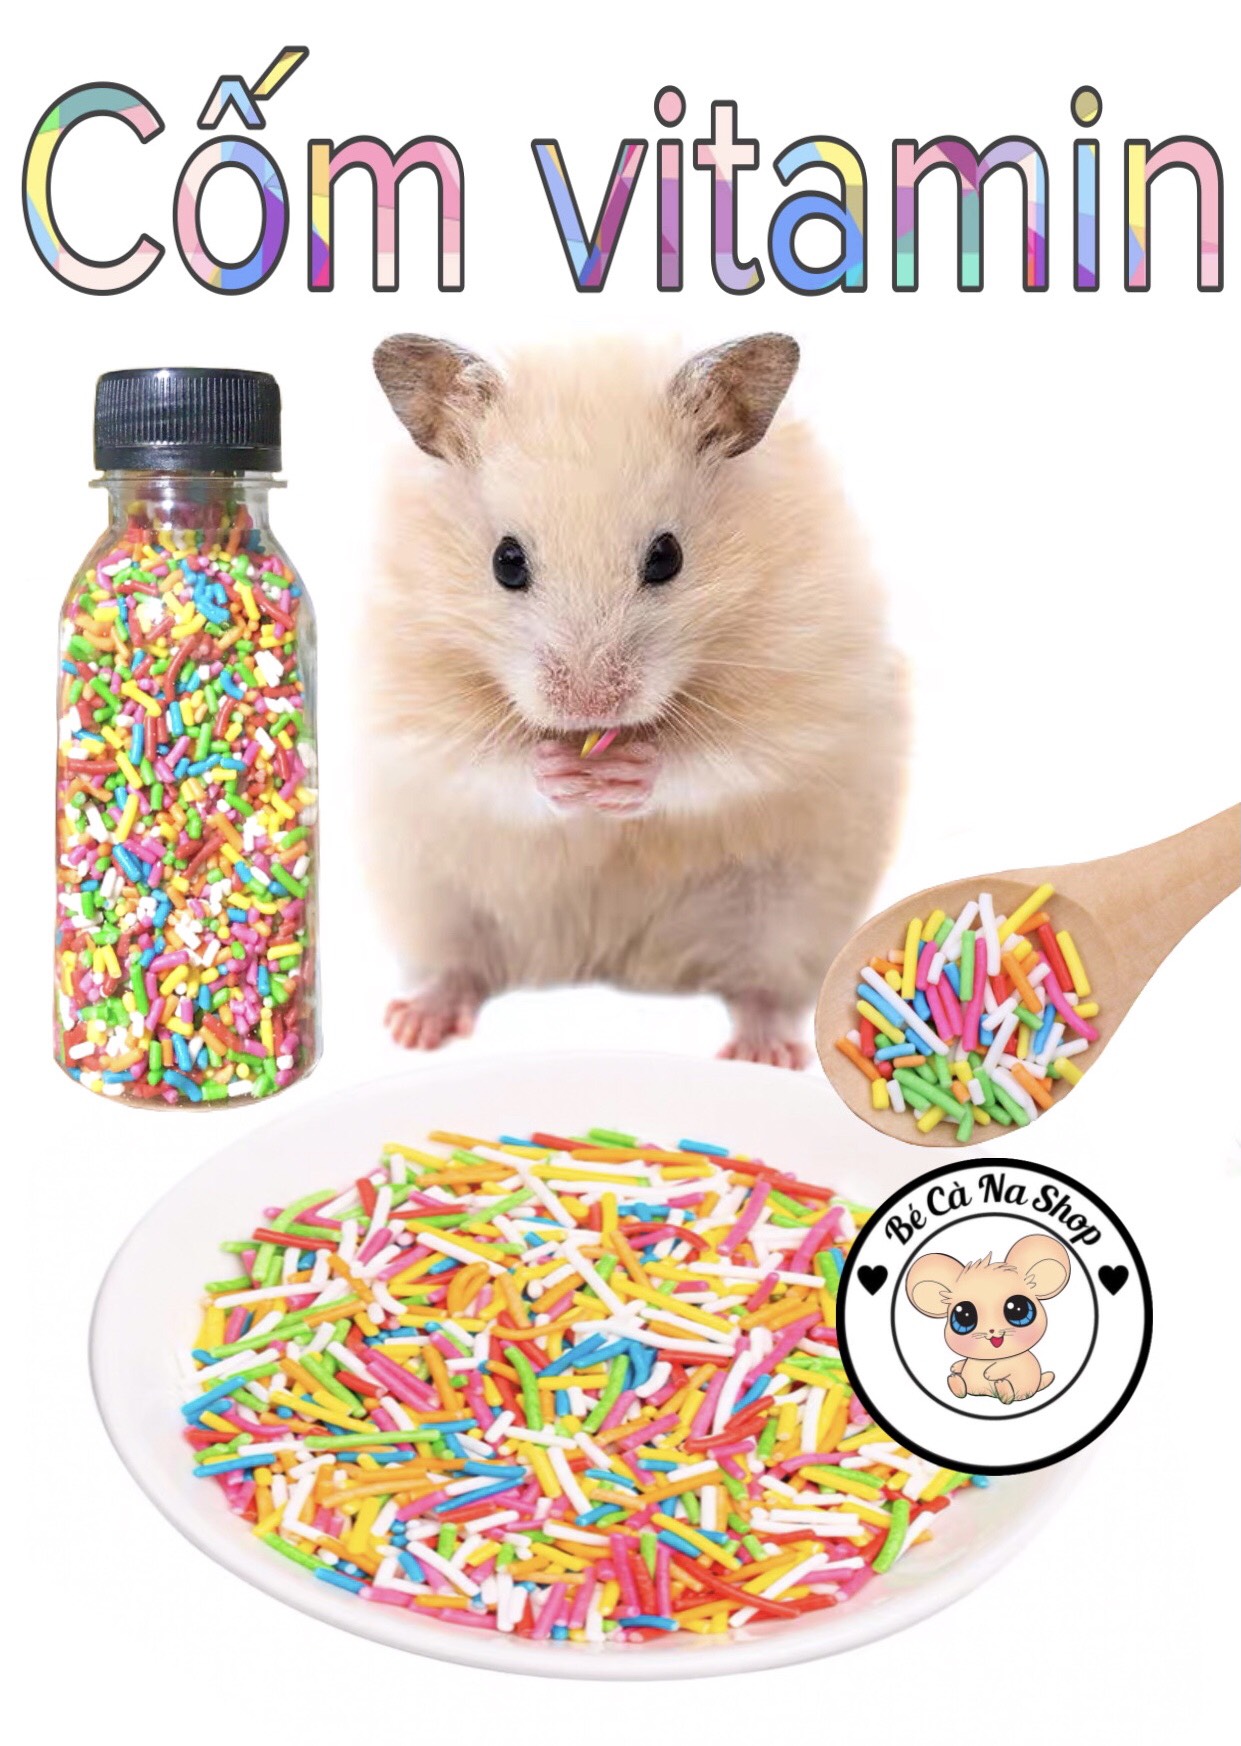 Cốm vitamin dinh dưỡng cho hamster 